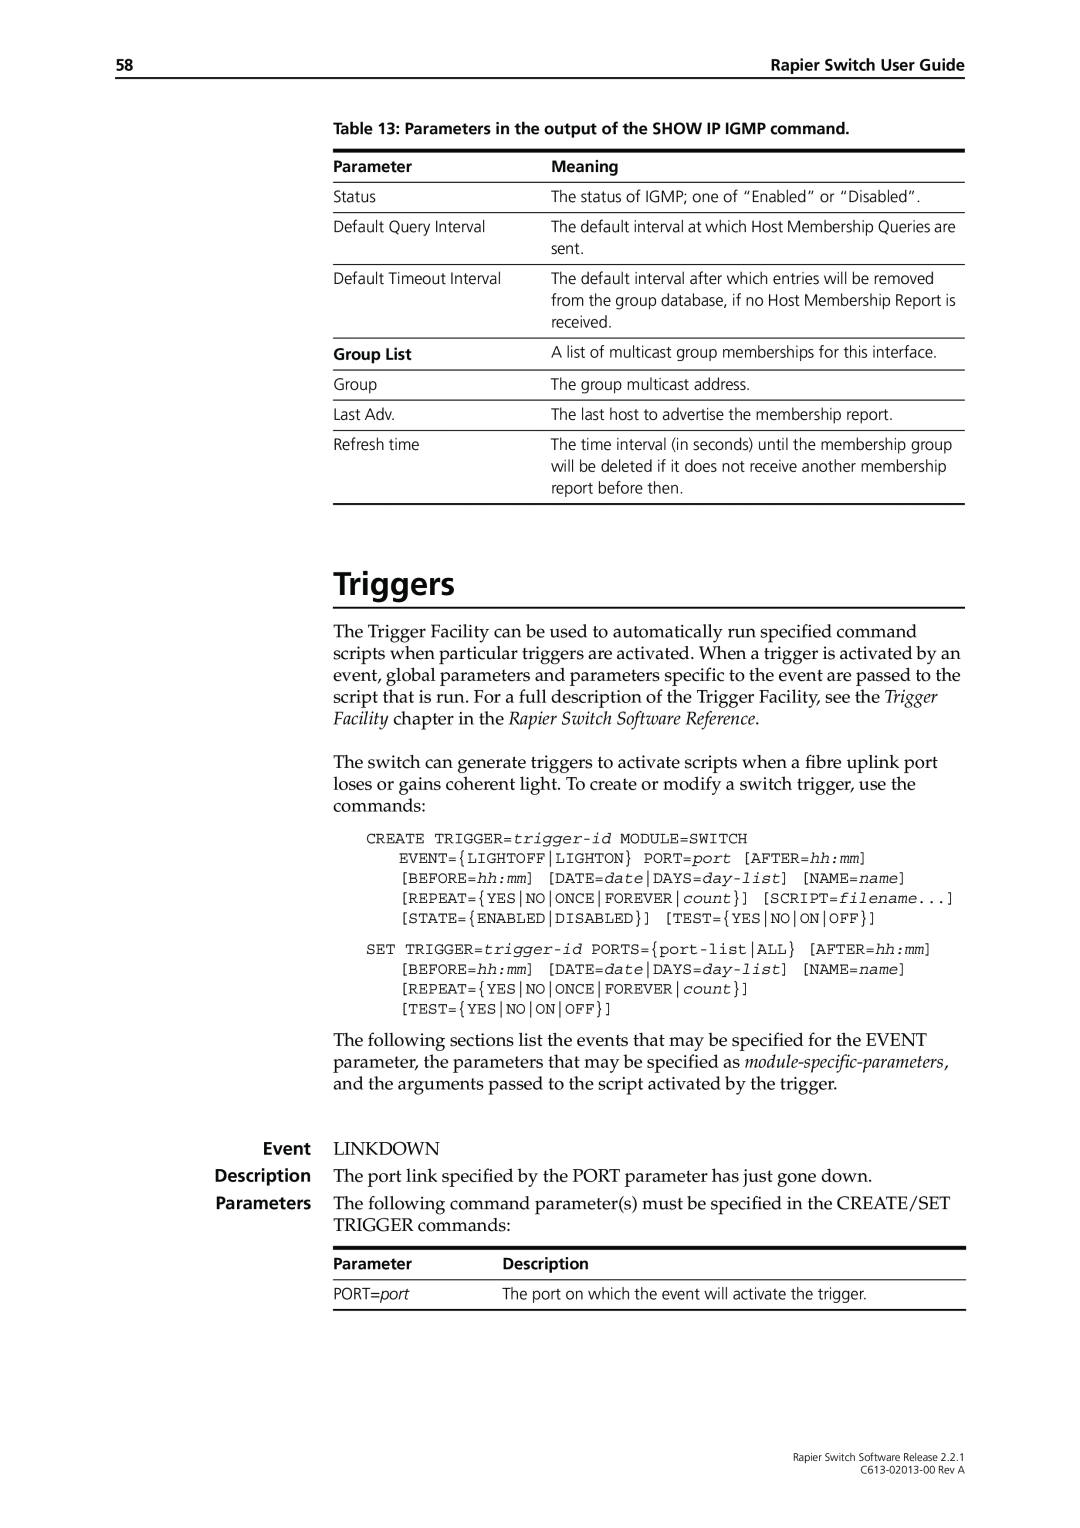 Allied Telesis C613-02013-00 manual Triggers 